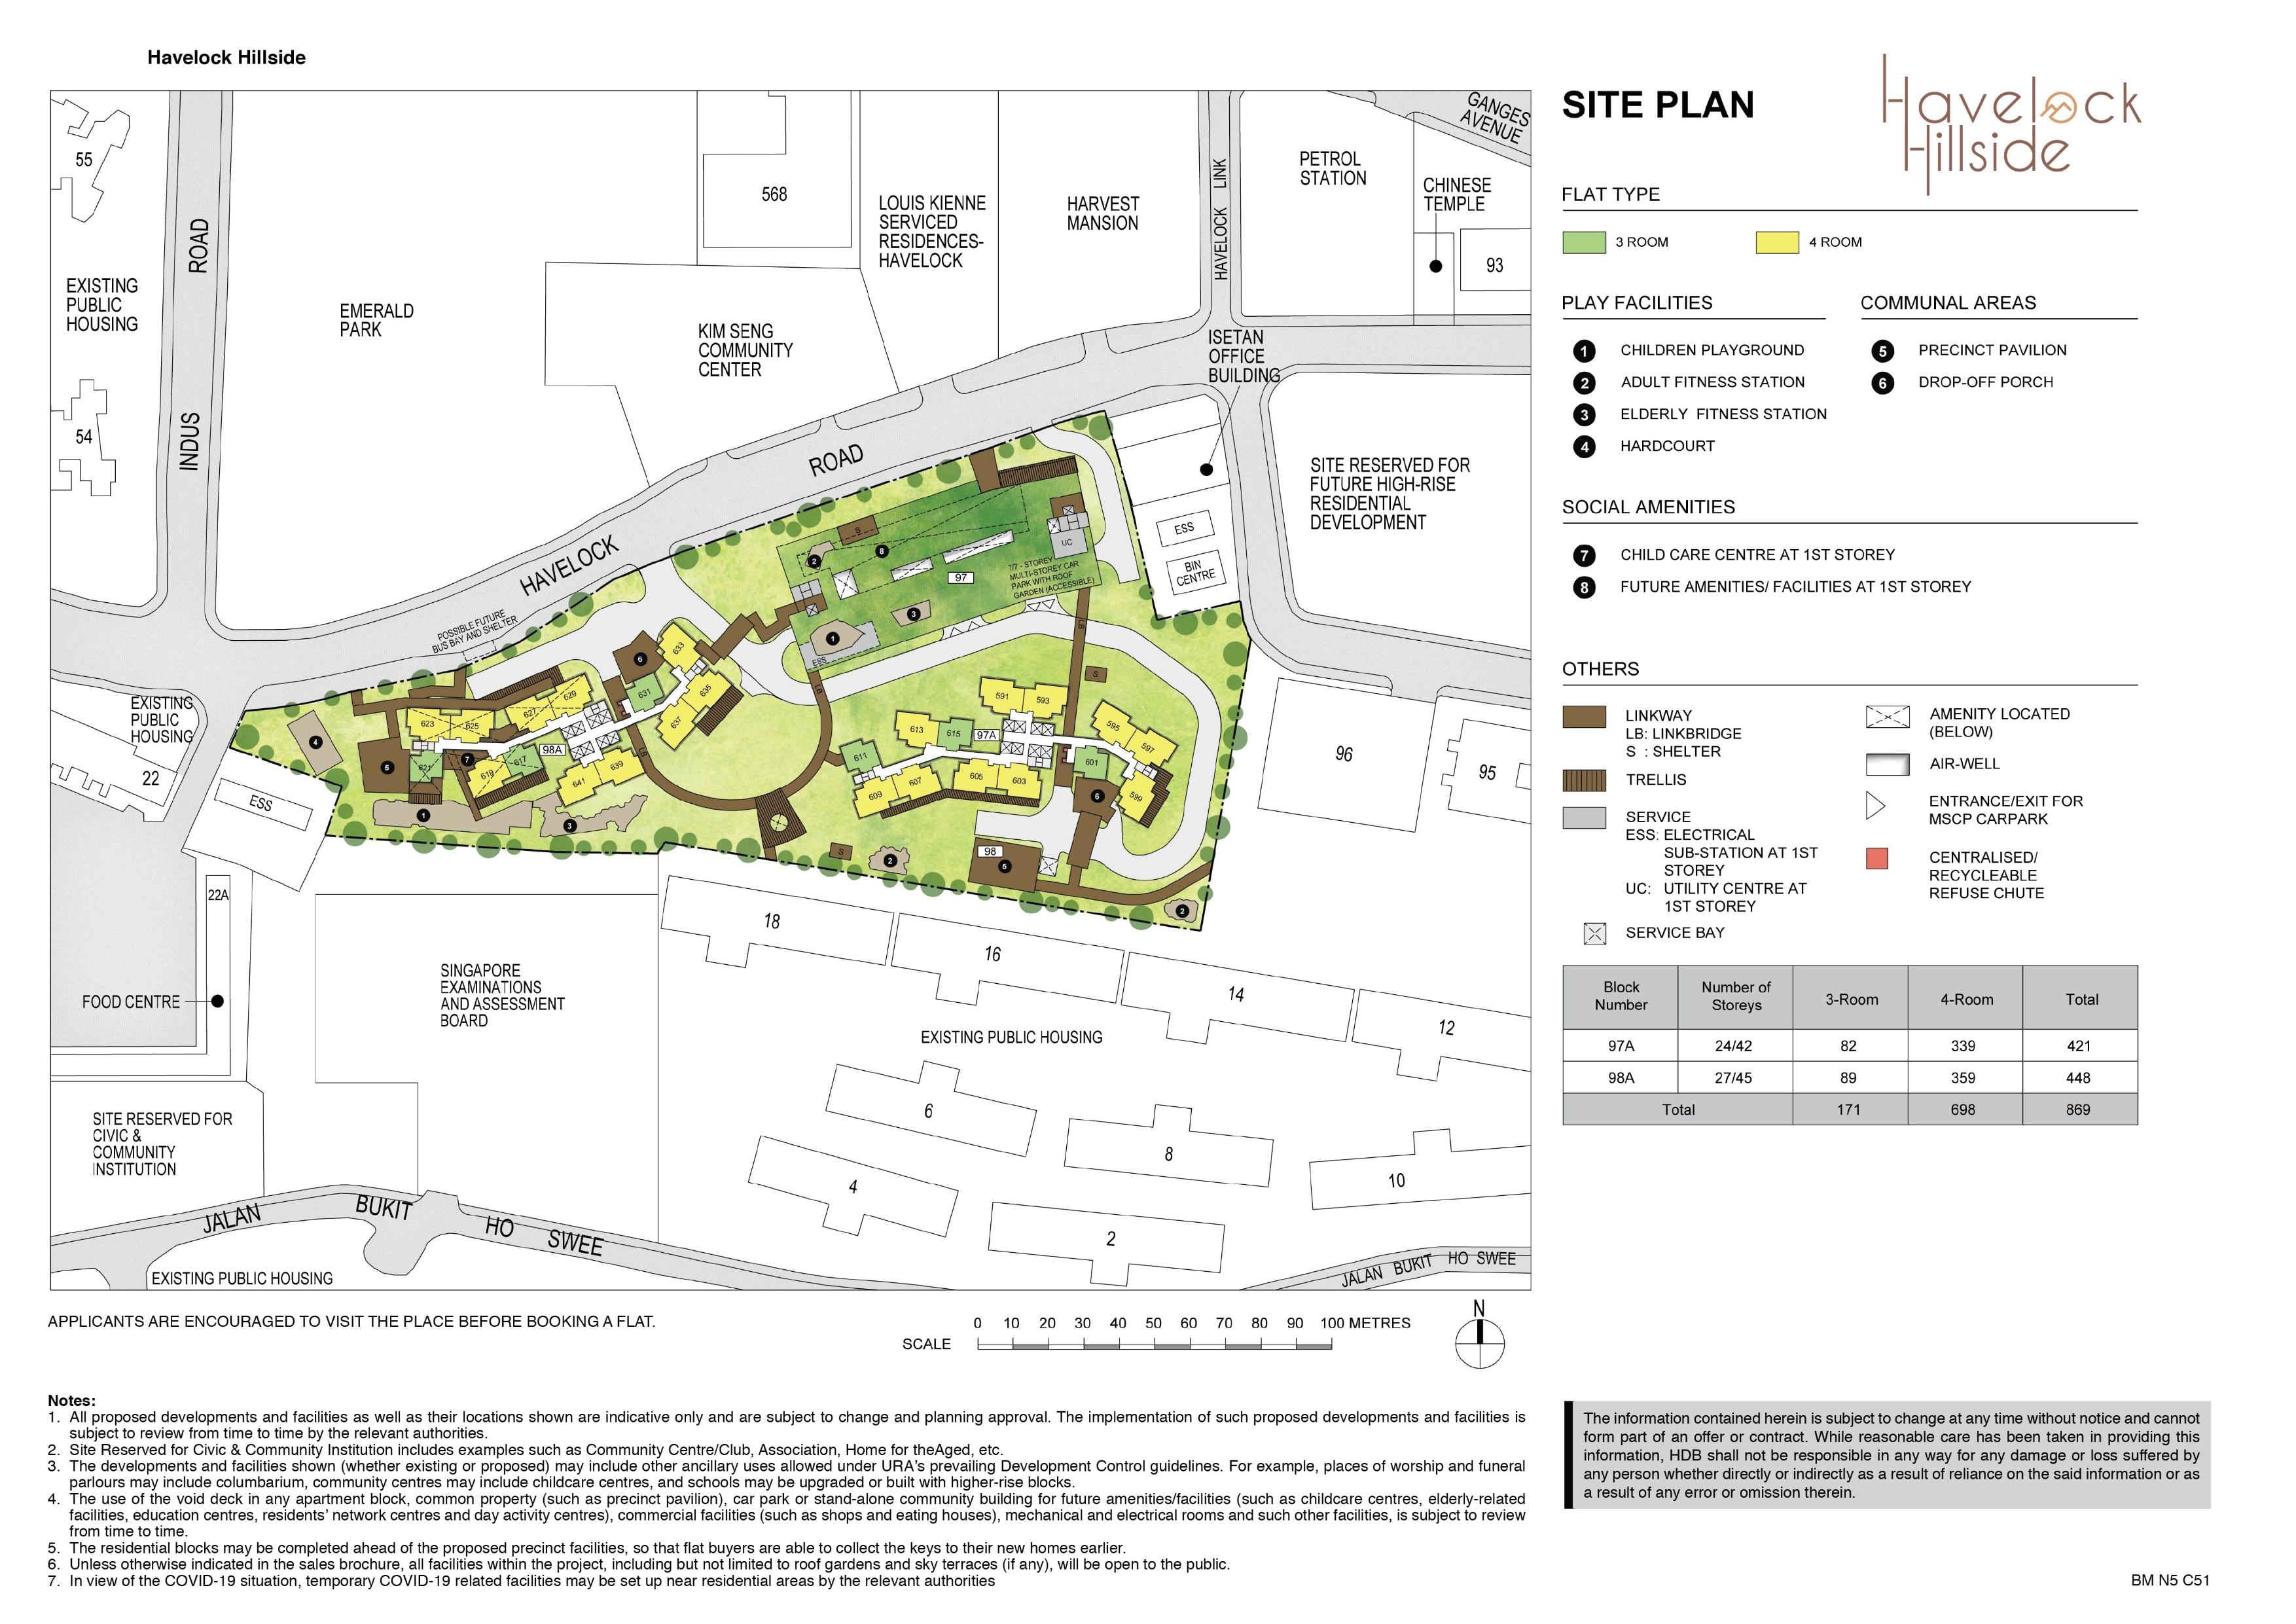 Havelock Hillside Site Plan